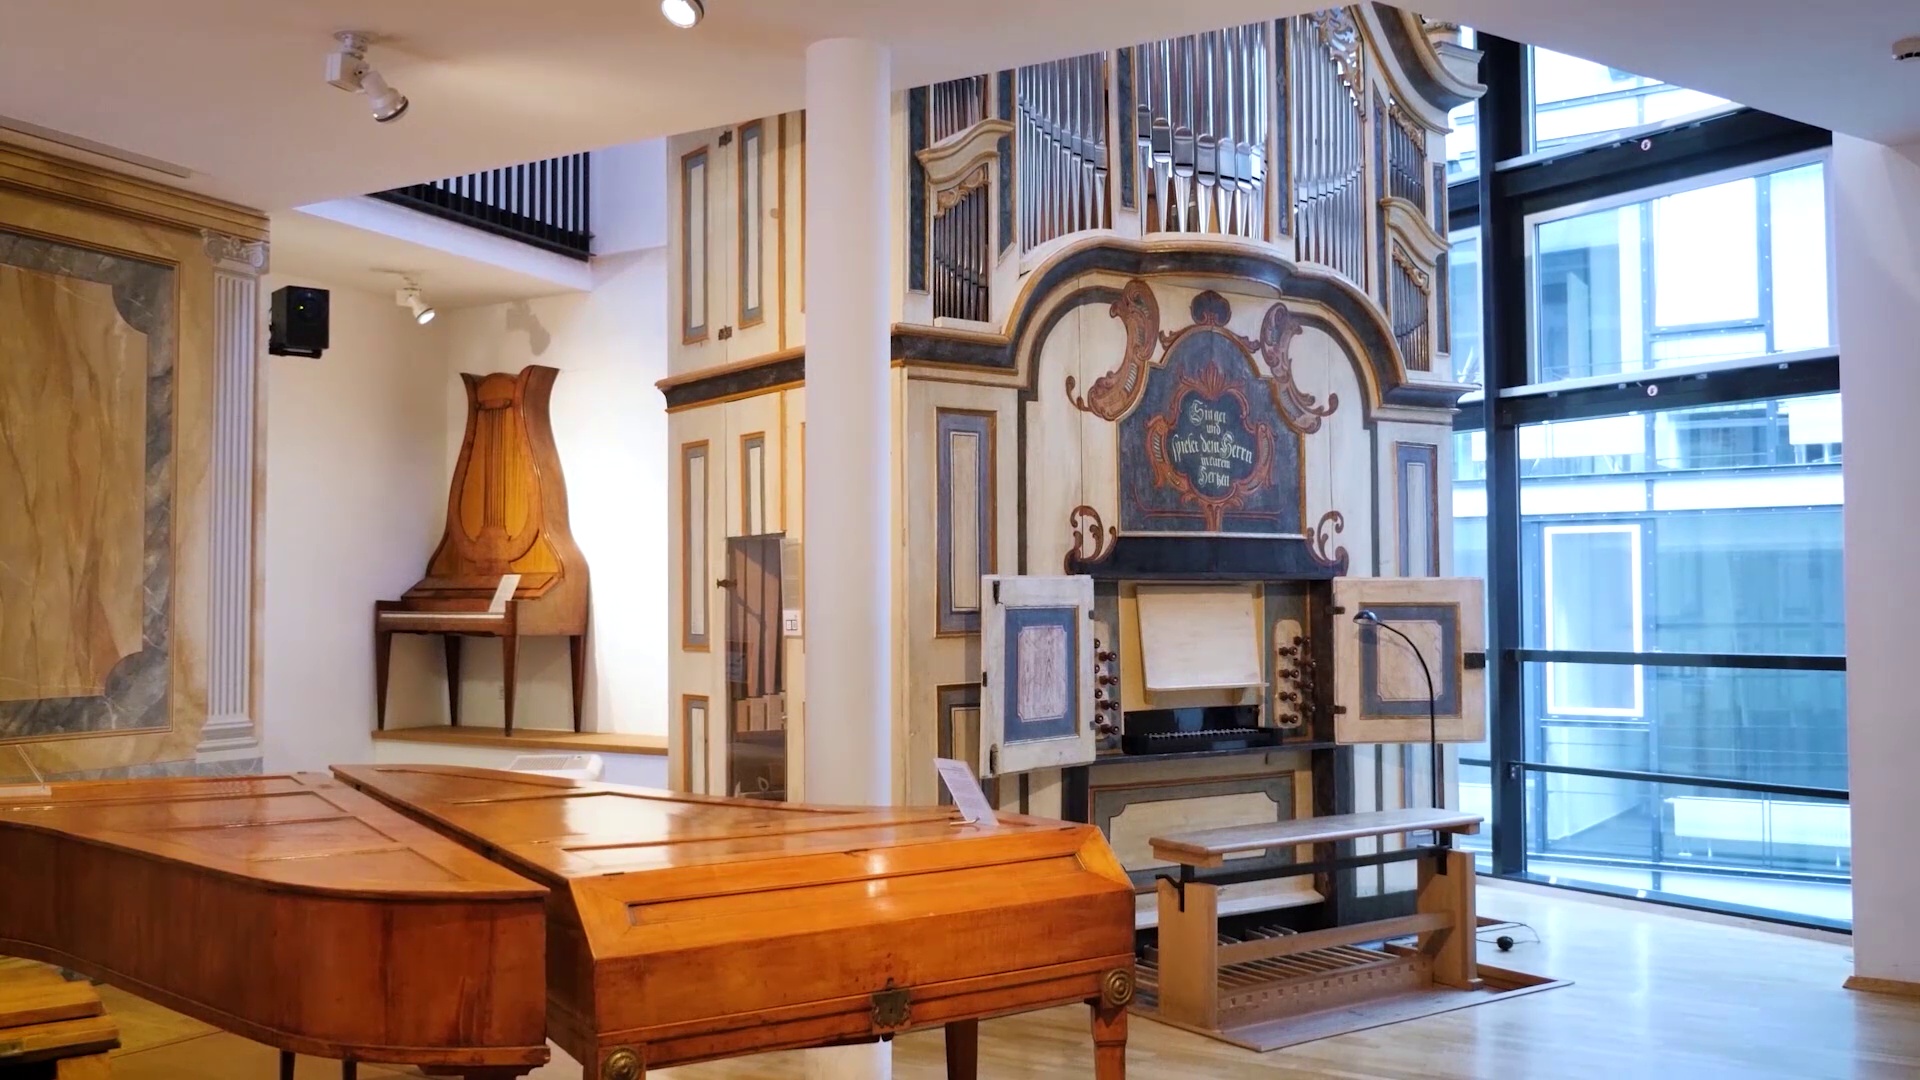 Halles Museen entdecken 06 - Händel-Haus